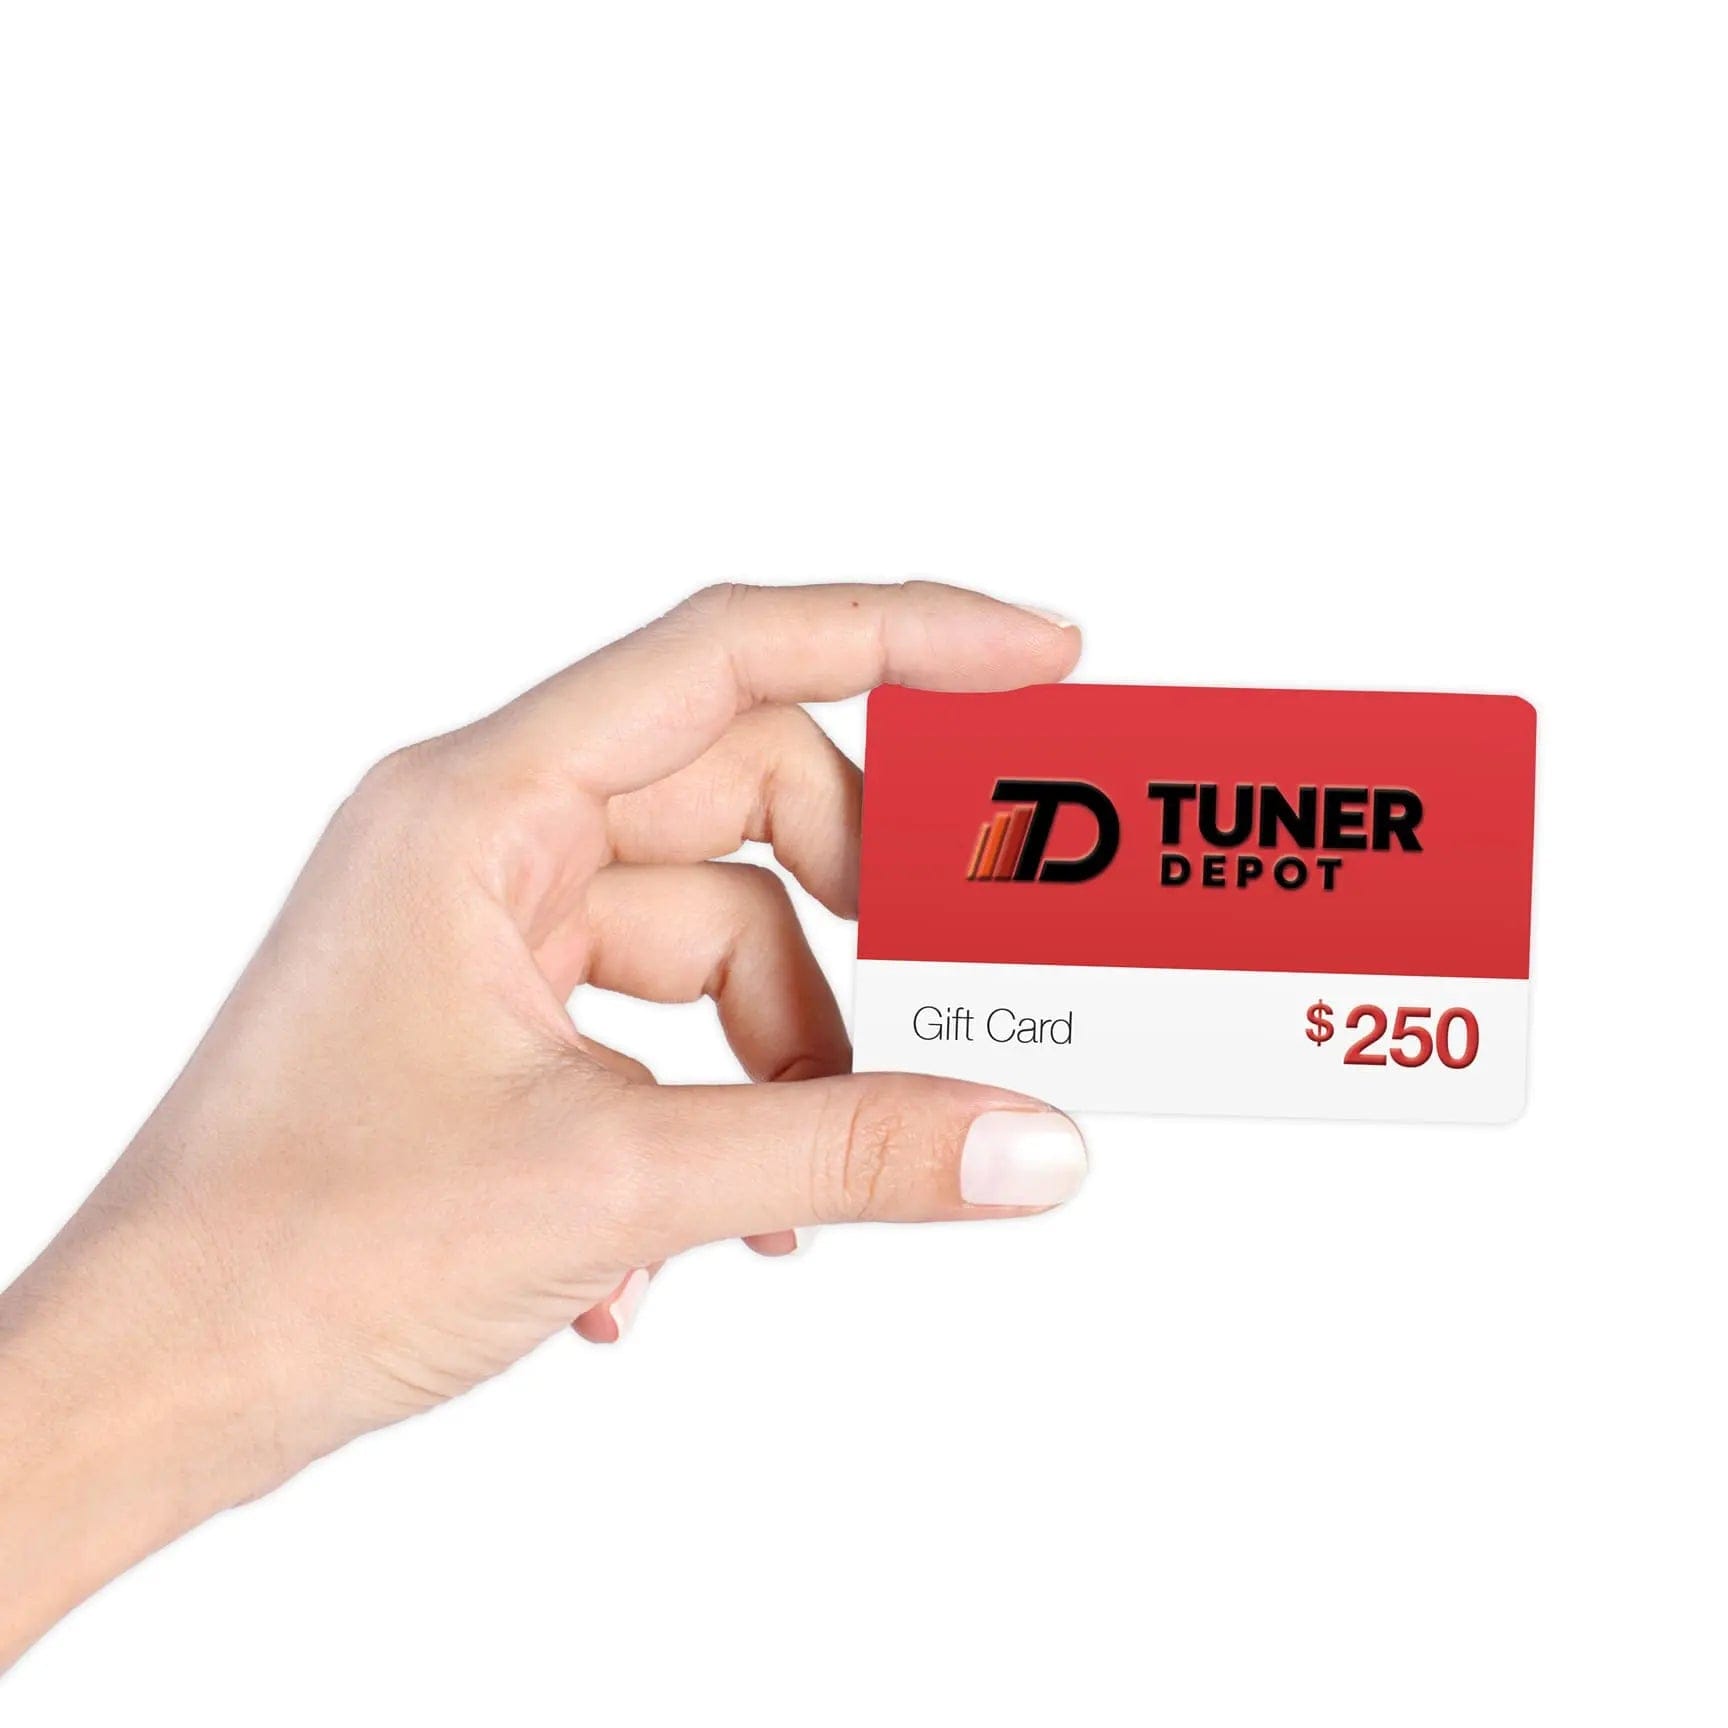 Tuner Depot  Accessories $250.00 Tuner Depot - Gift Card